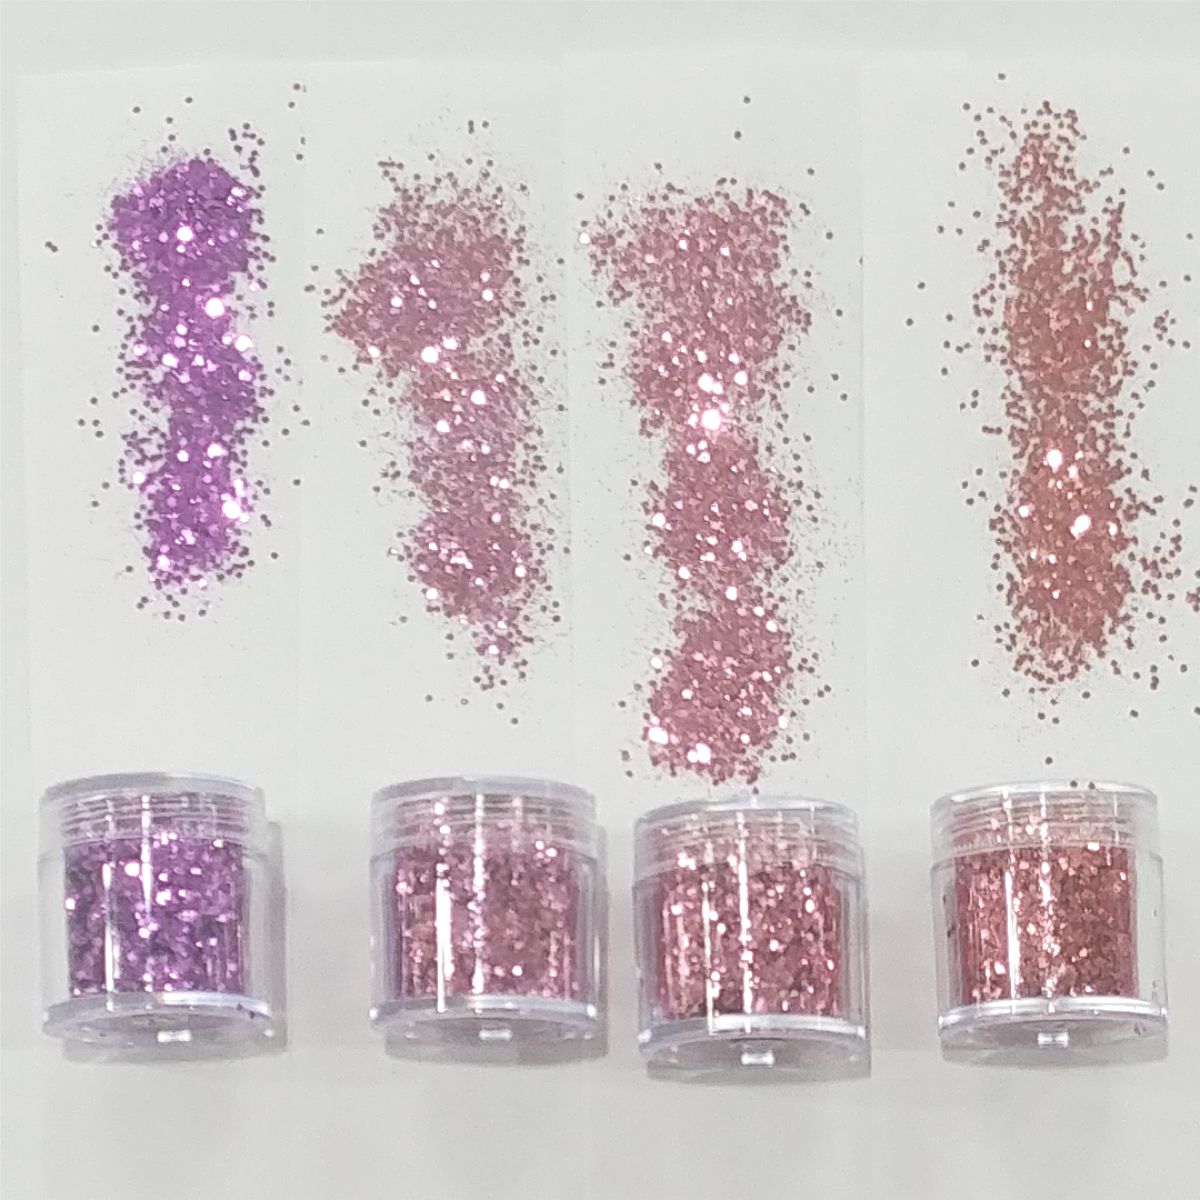 Purple Loose Chunky Glitter 2 oz Bottle Craft DIY Resin Crafts